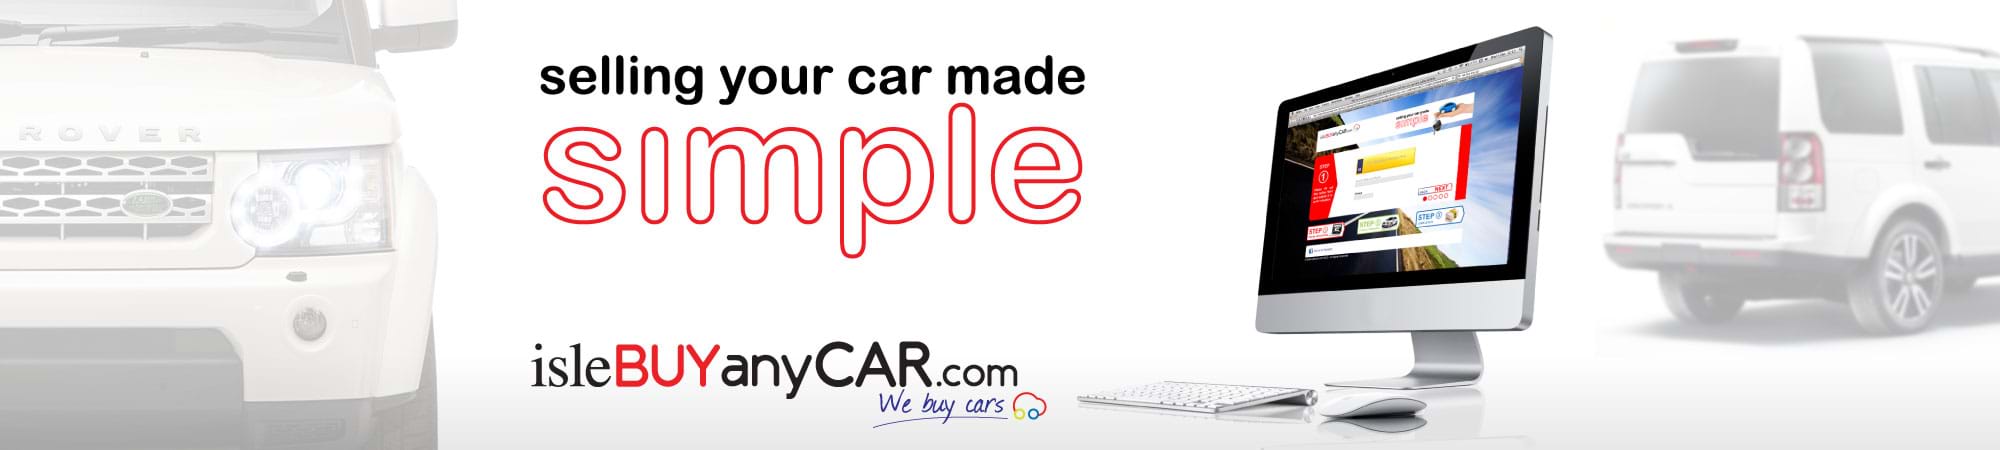 isleBUYanyCAR.com Selling your car made simple